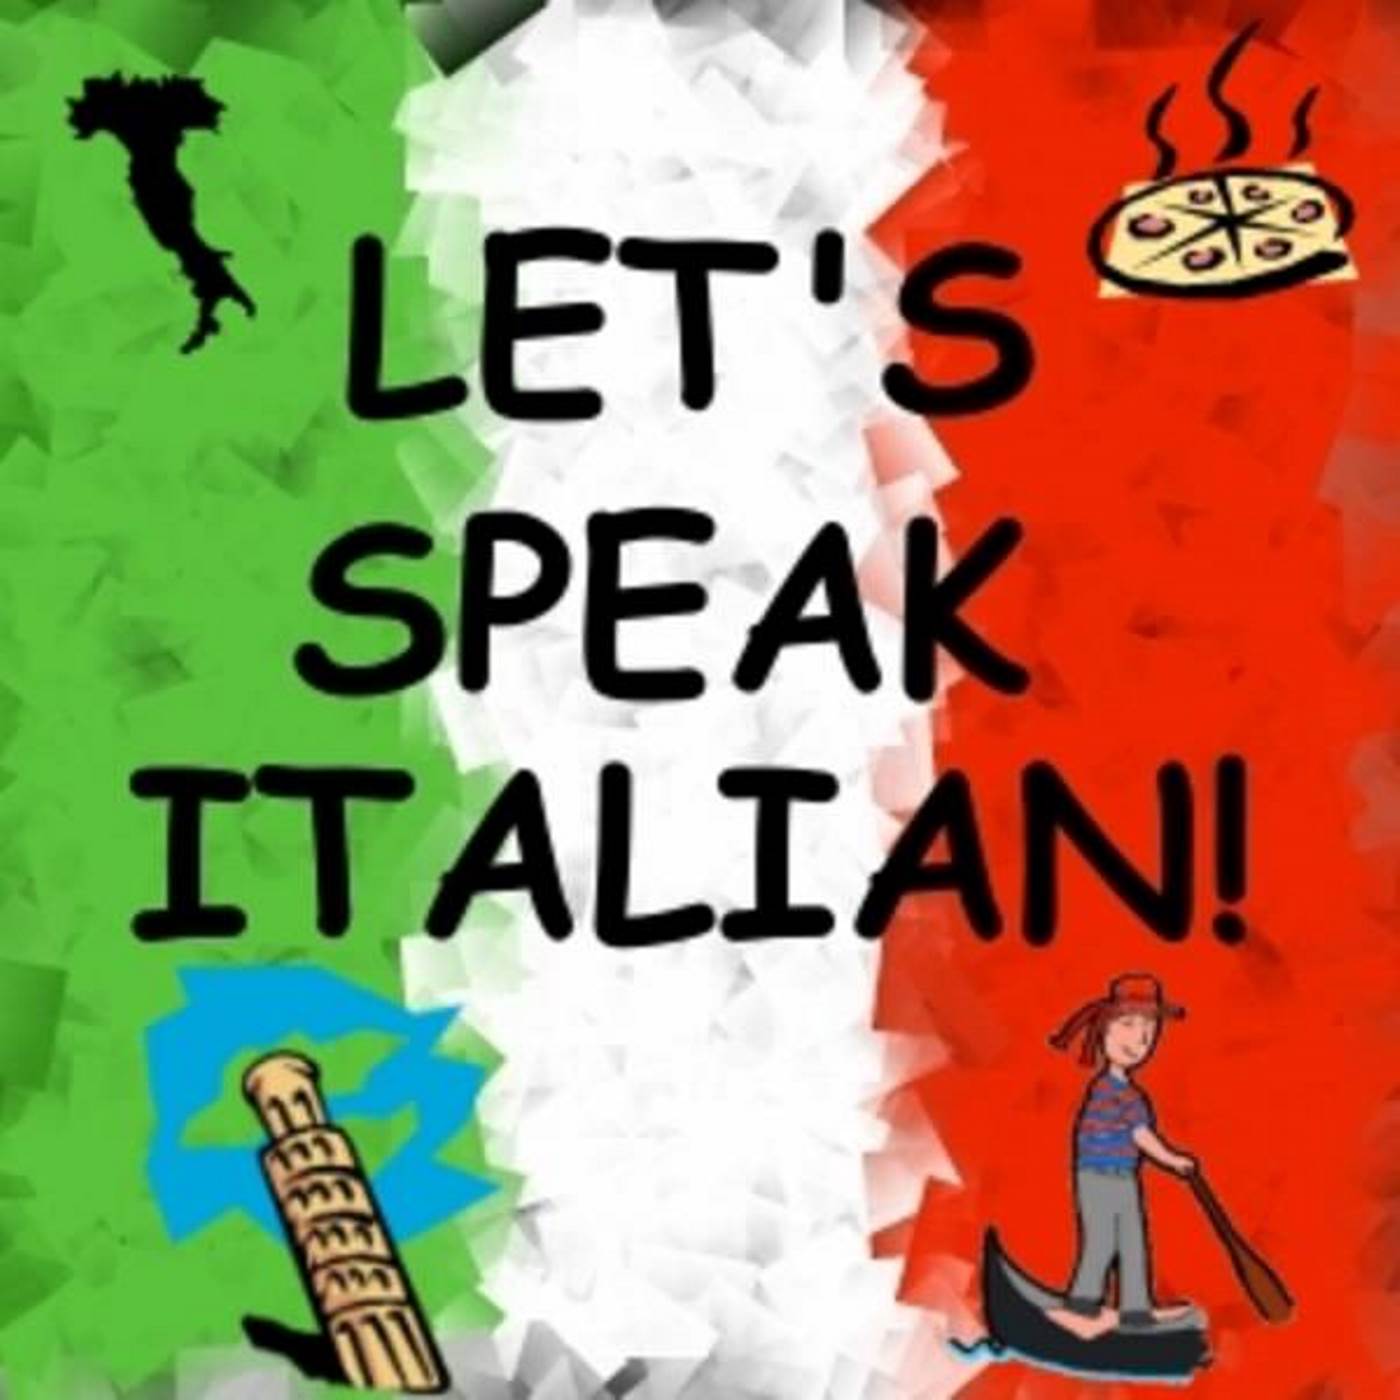 italian language courses